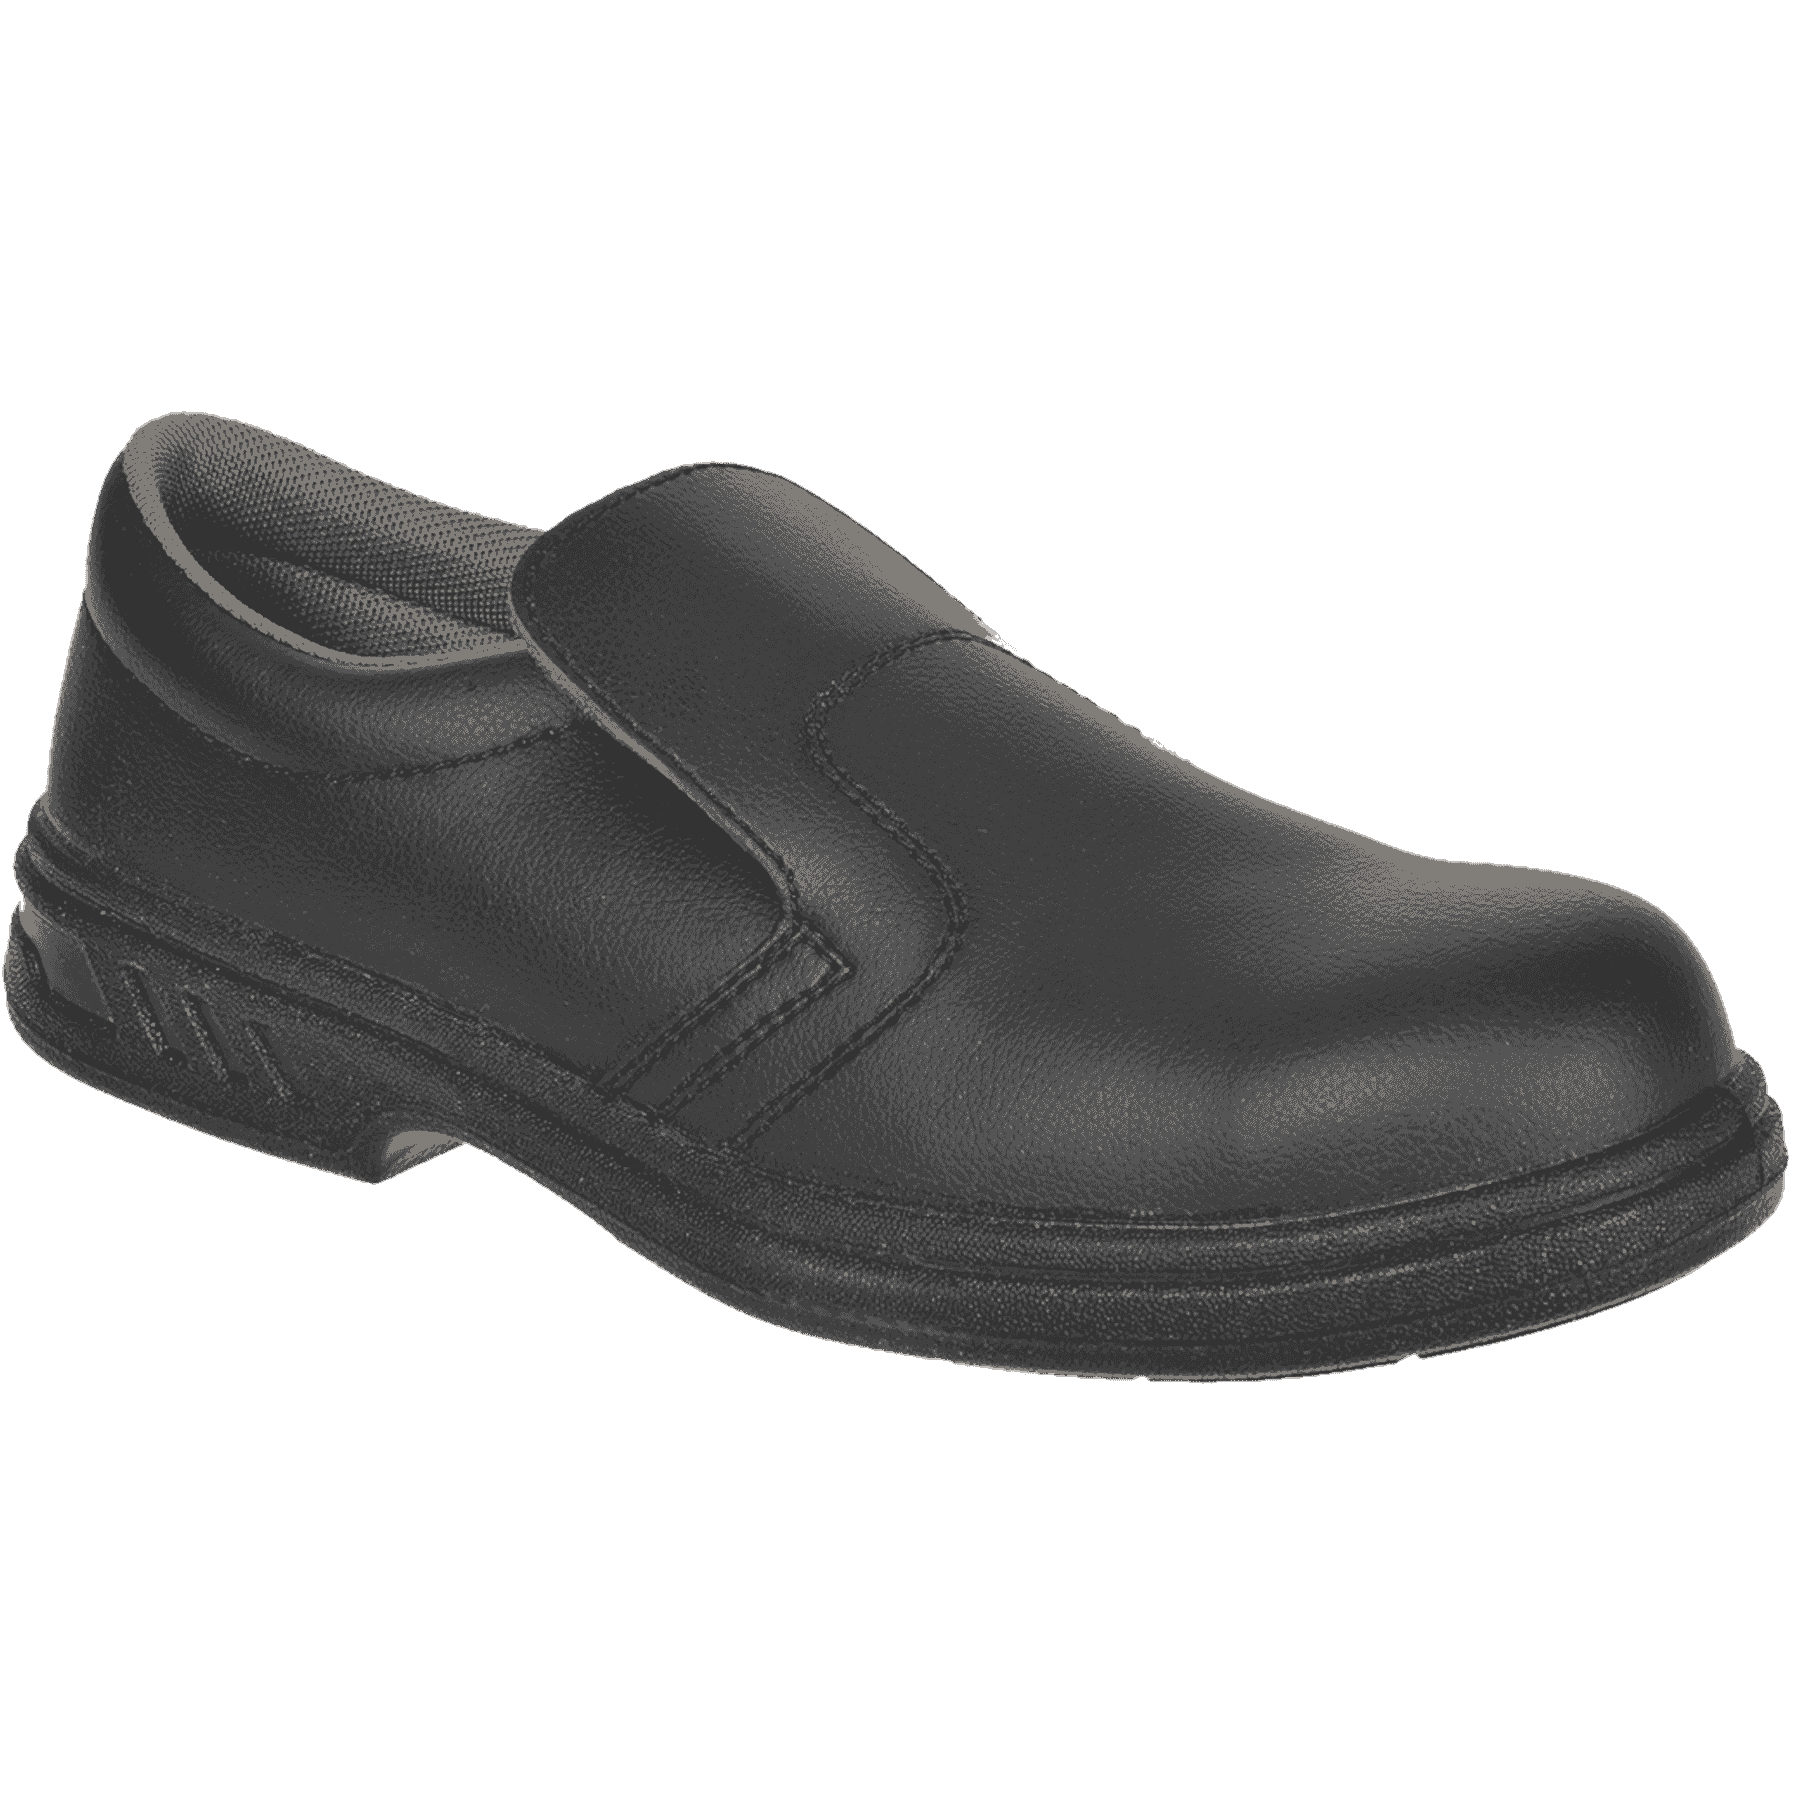 Steelite S2 Slip On Safety Shoes FW81 Black